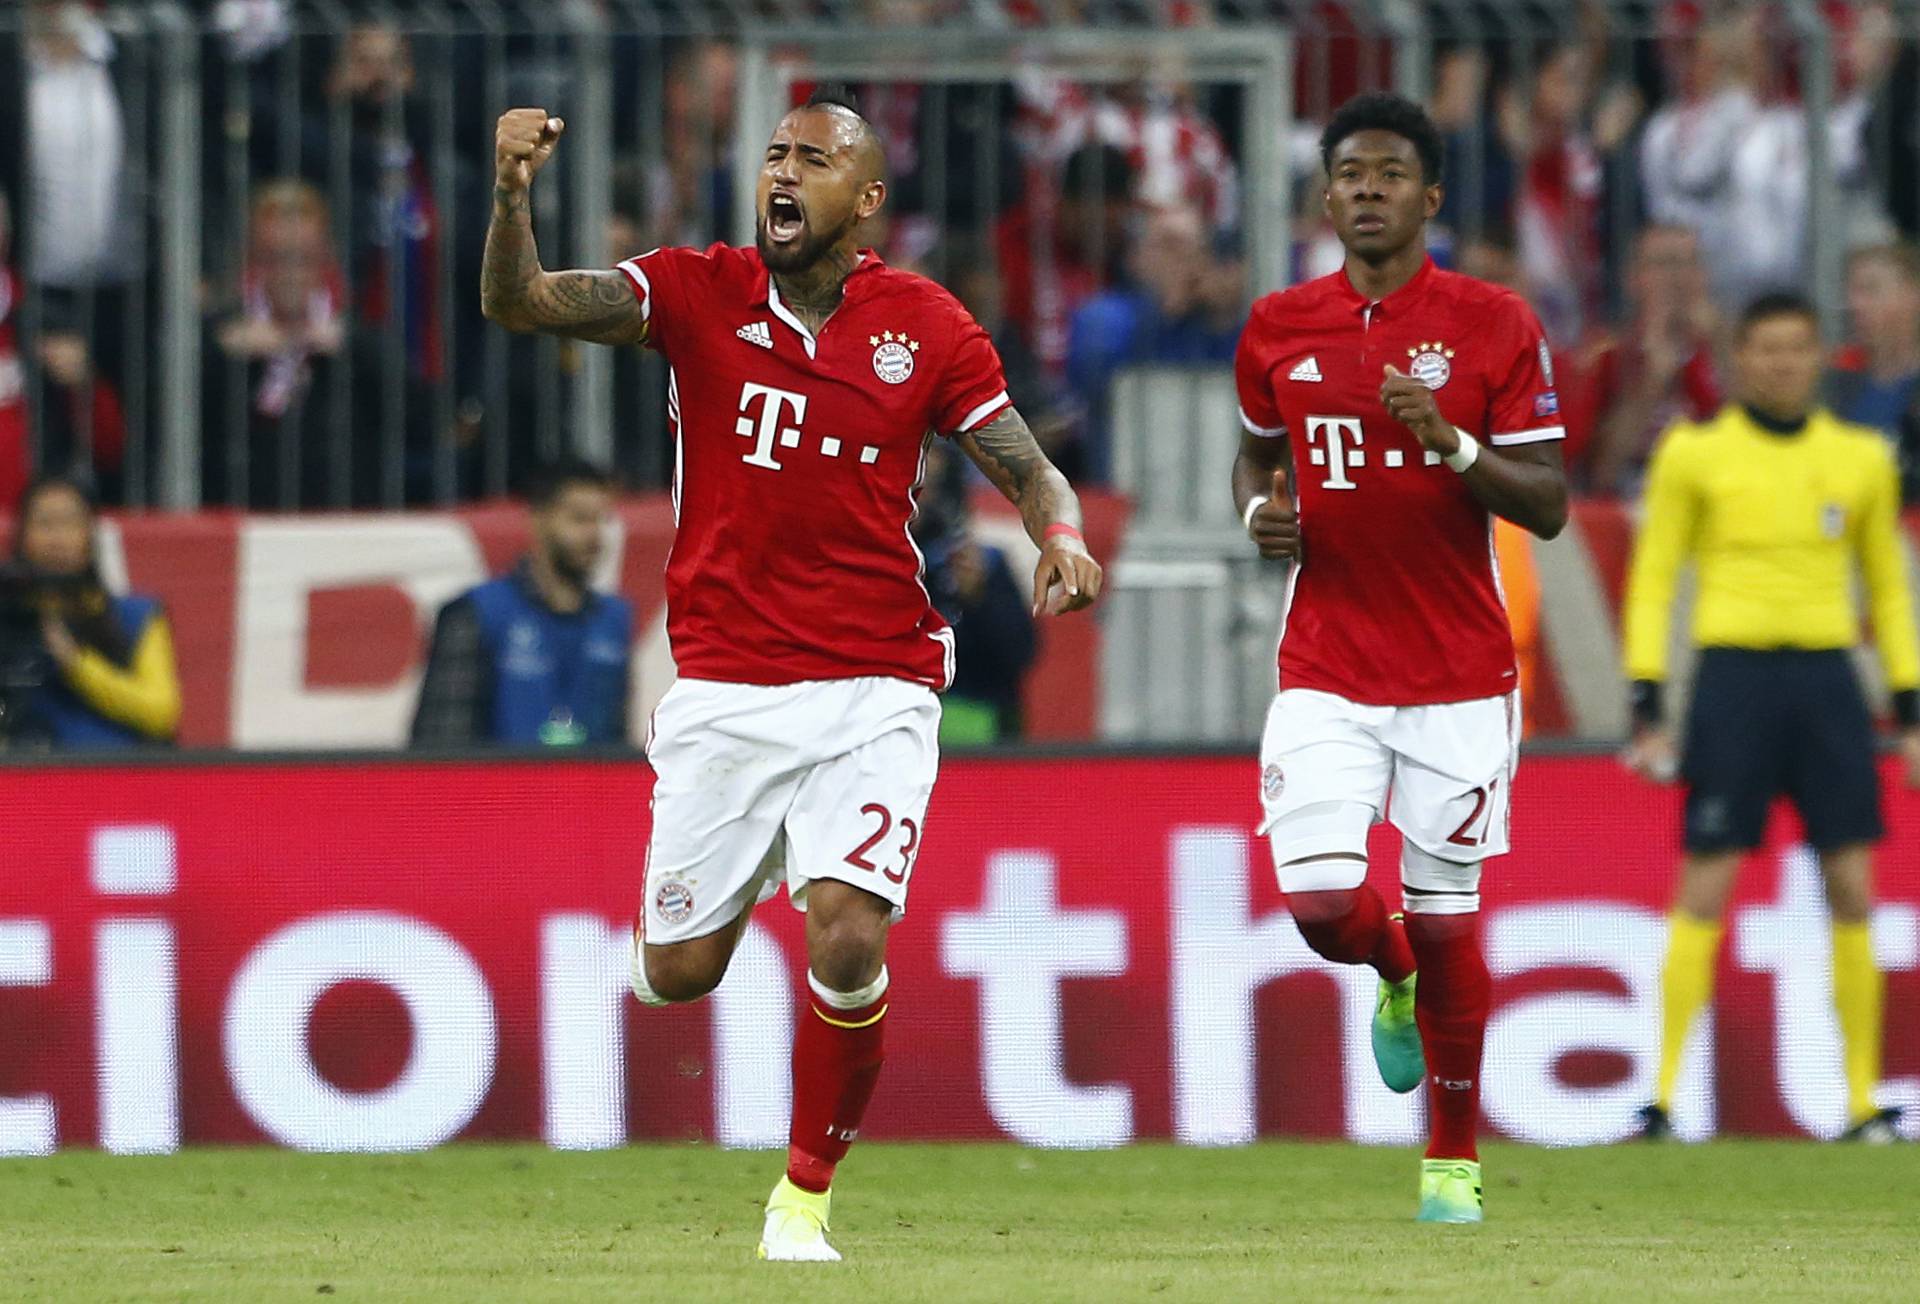 Bayern Munich's Arturo Vidal celebrates scoring their first goal with David Alaba